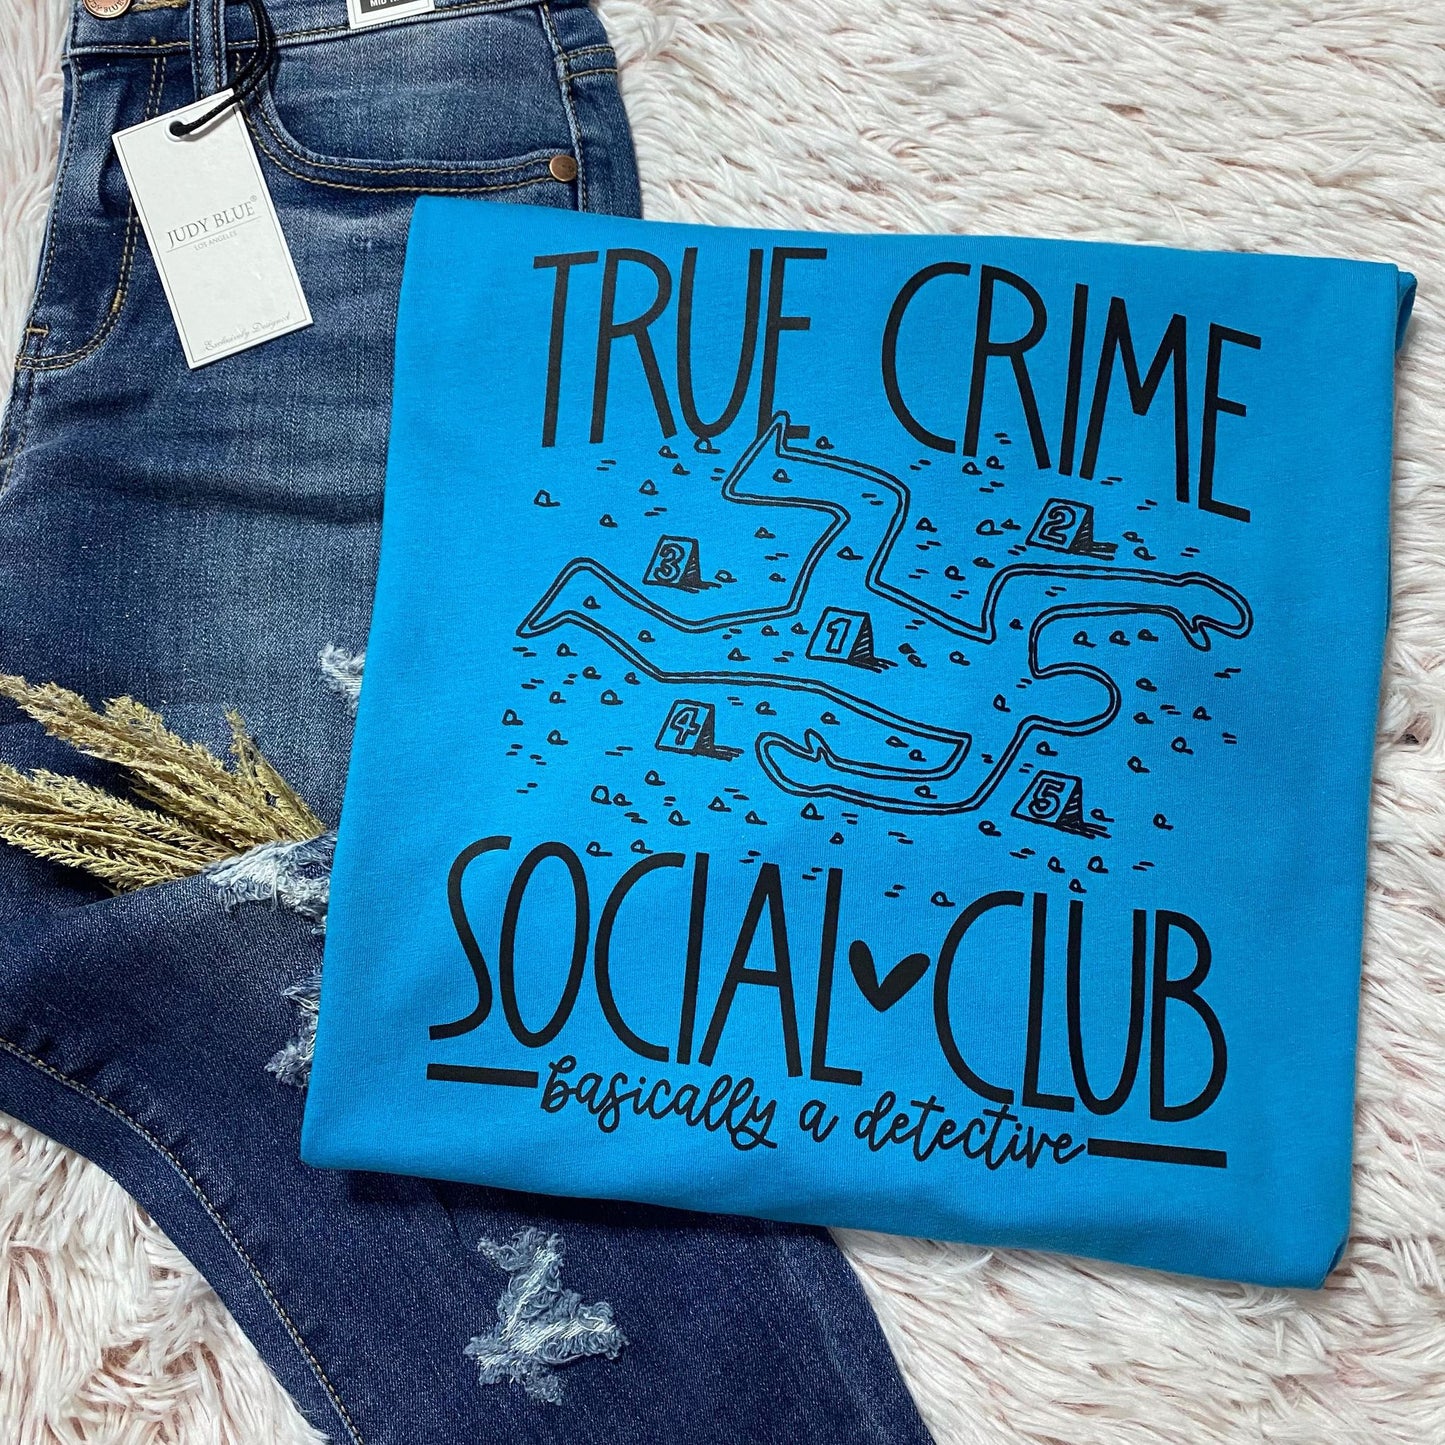 True crime social club